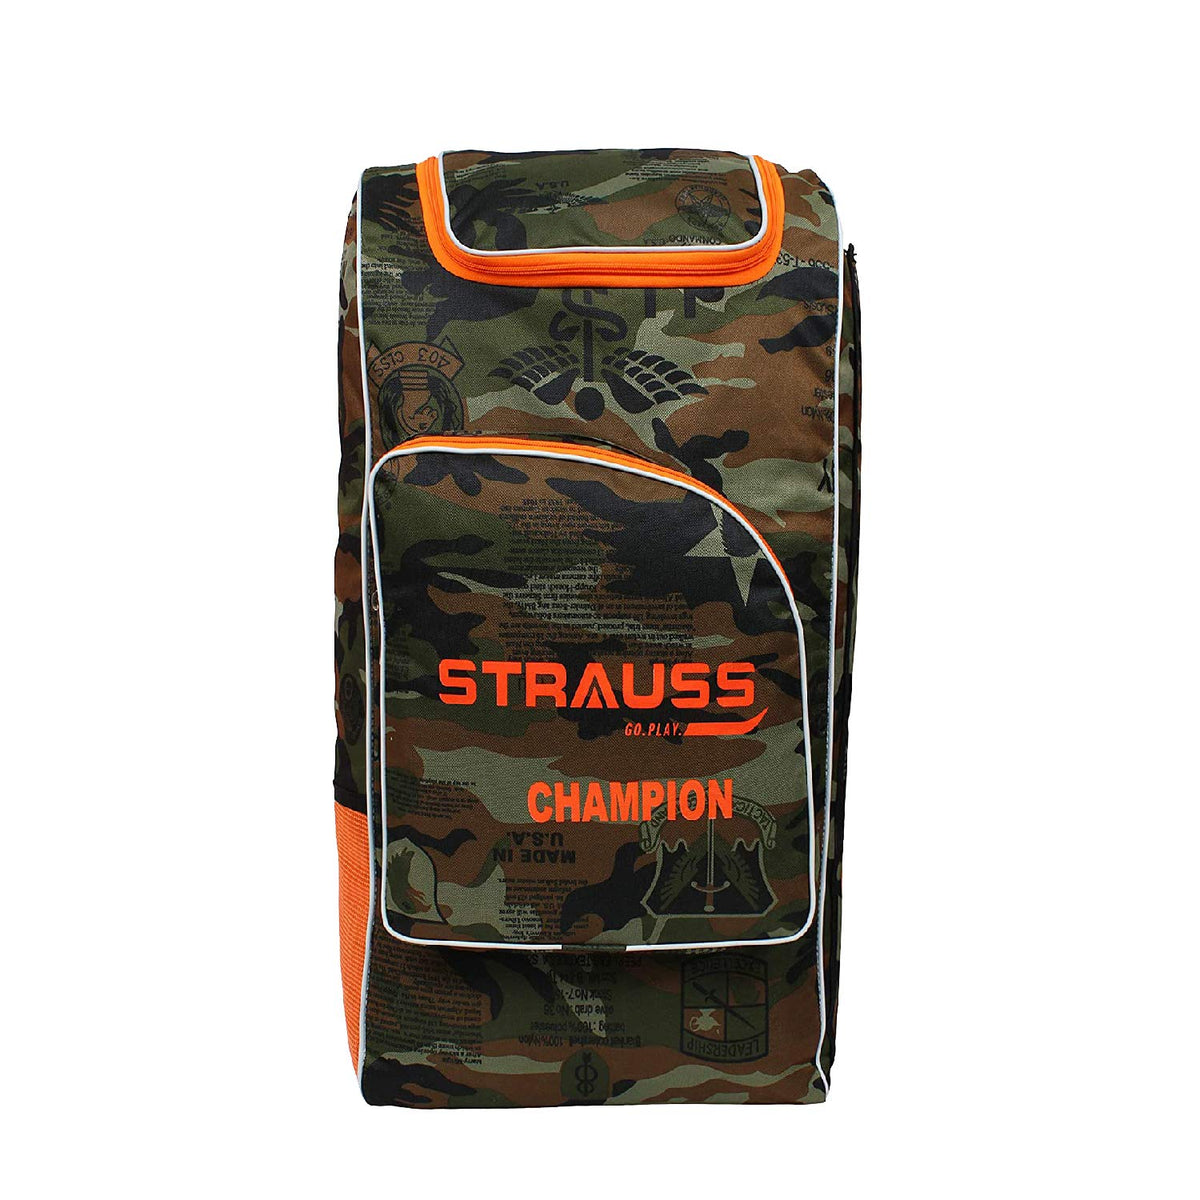 STRAUSS Cricket Kit Bag (Champion)